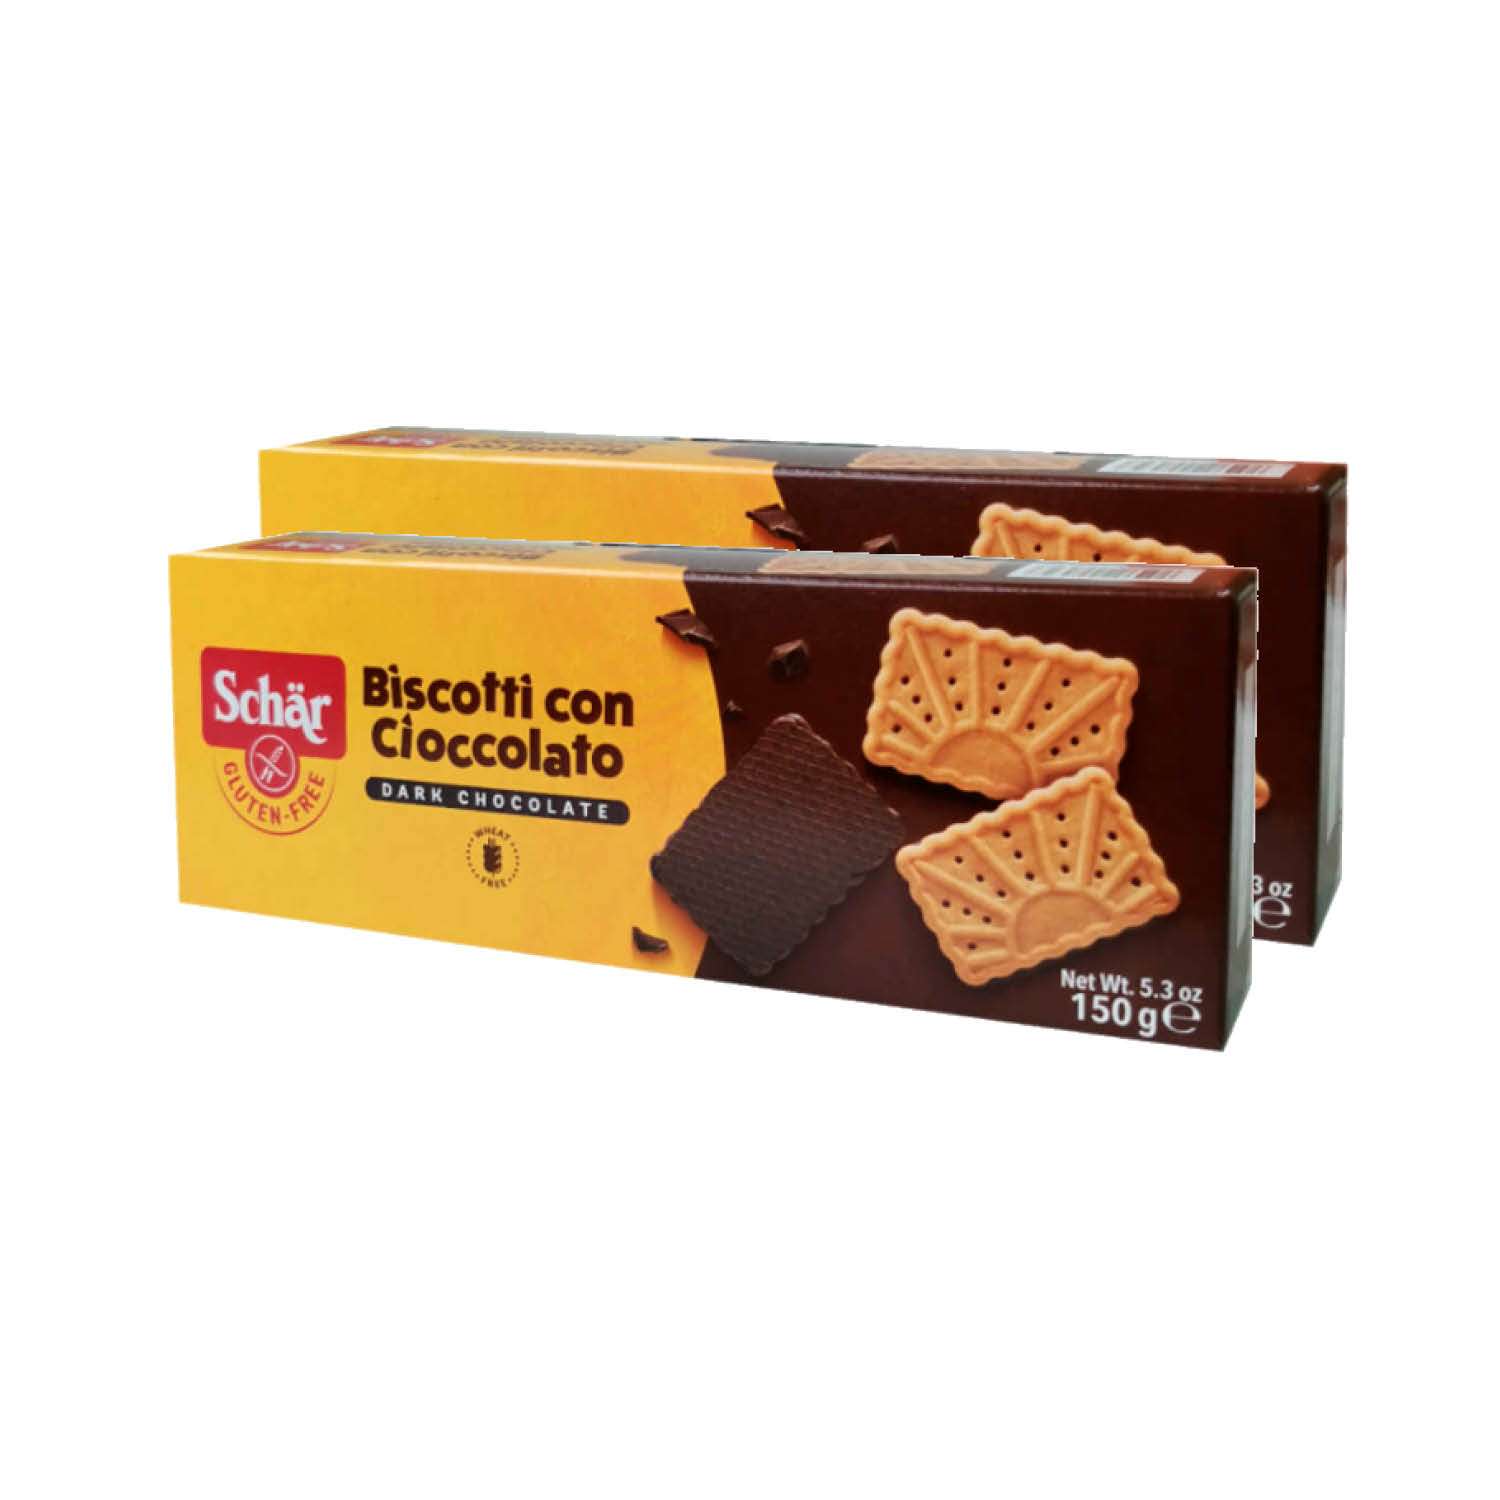 Печенье Schaer без глютена с шоколадом Biscotti con Cioccolato 150г*2 штуки - фото 1